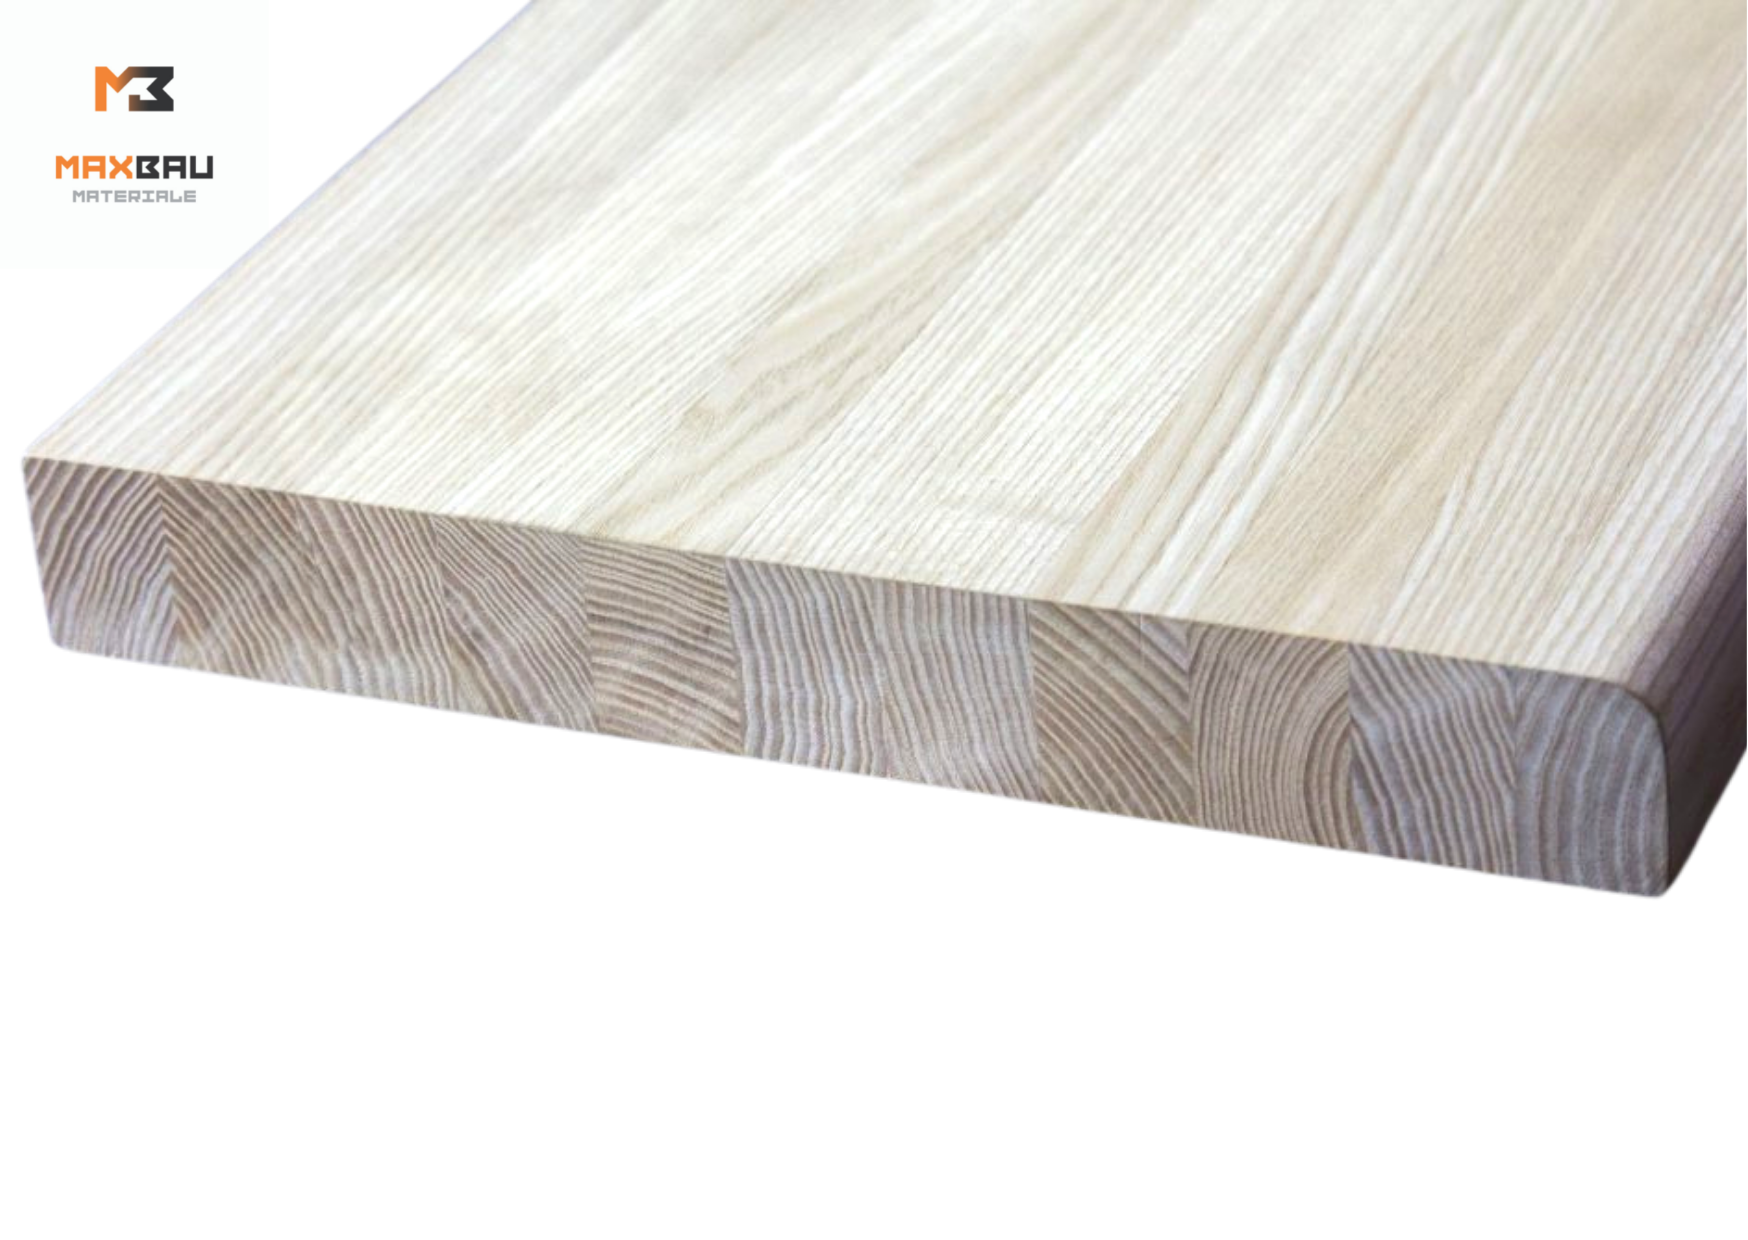 Placi din lemn incleiat - Placa de lemn incleiat MaxBau 1200 x 200 x 28 mm Clasa AB, https:maxbau.ro